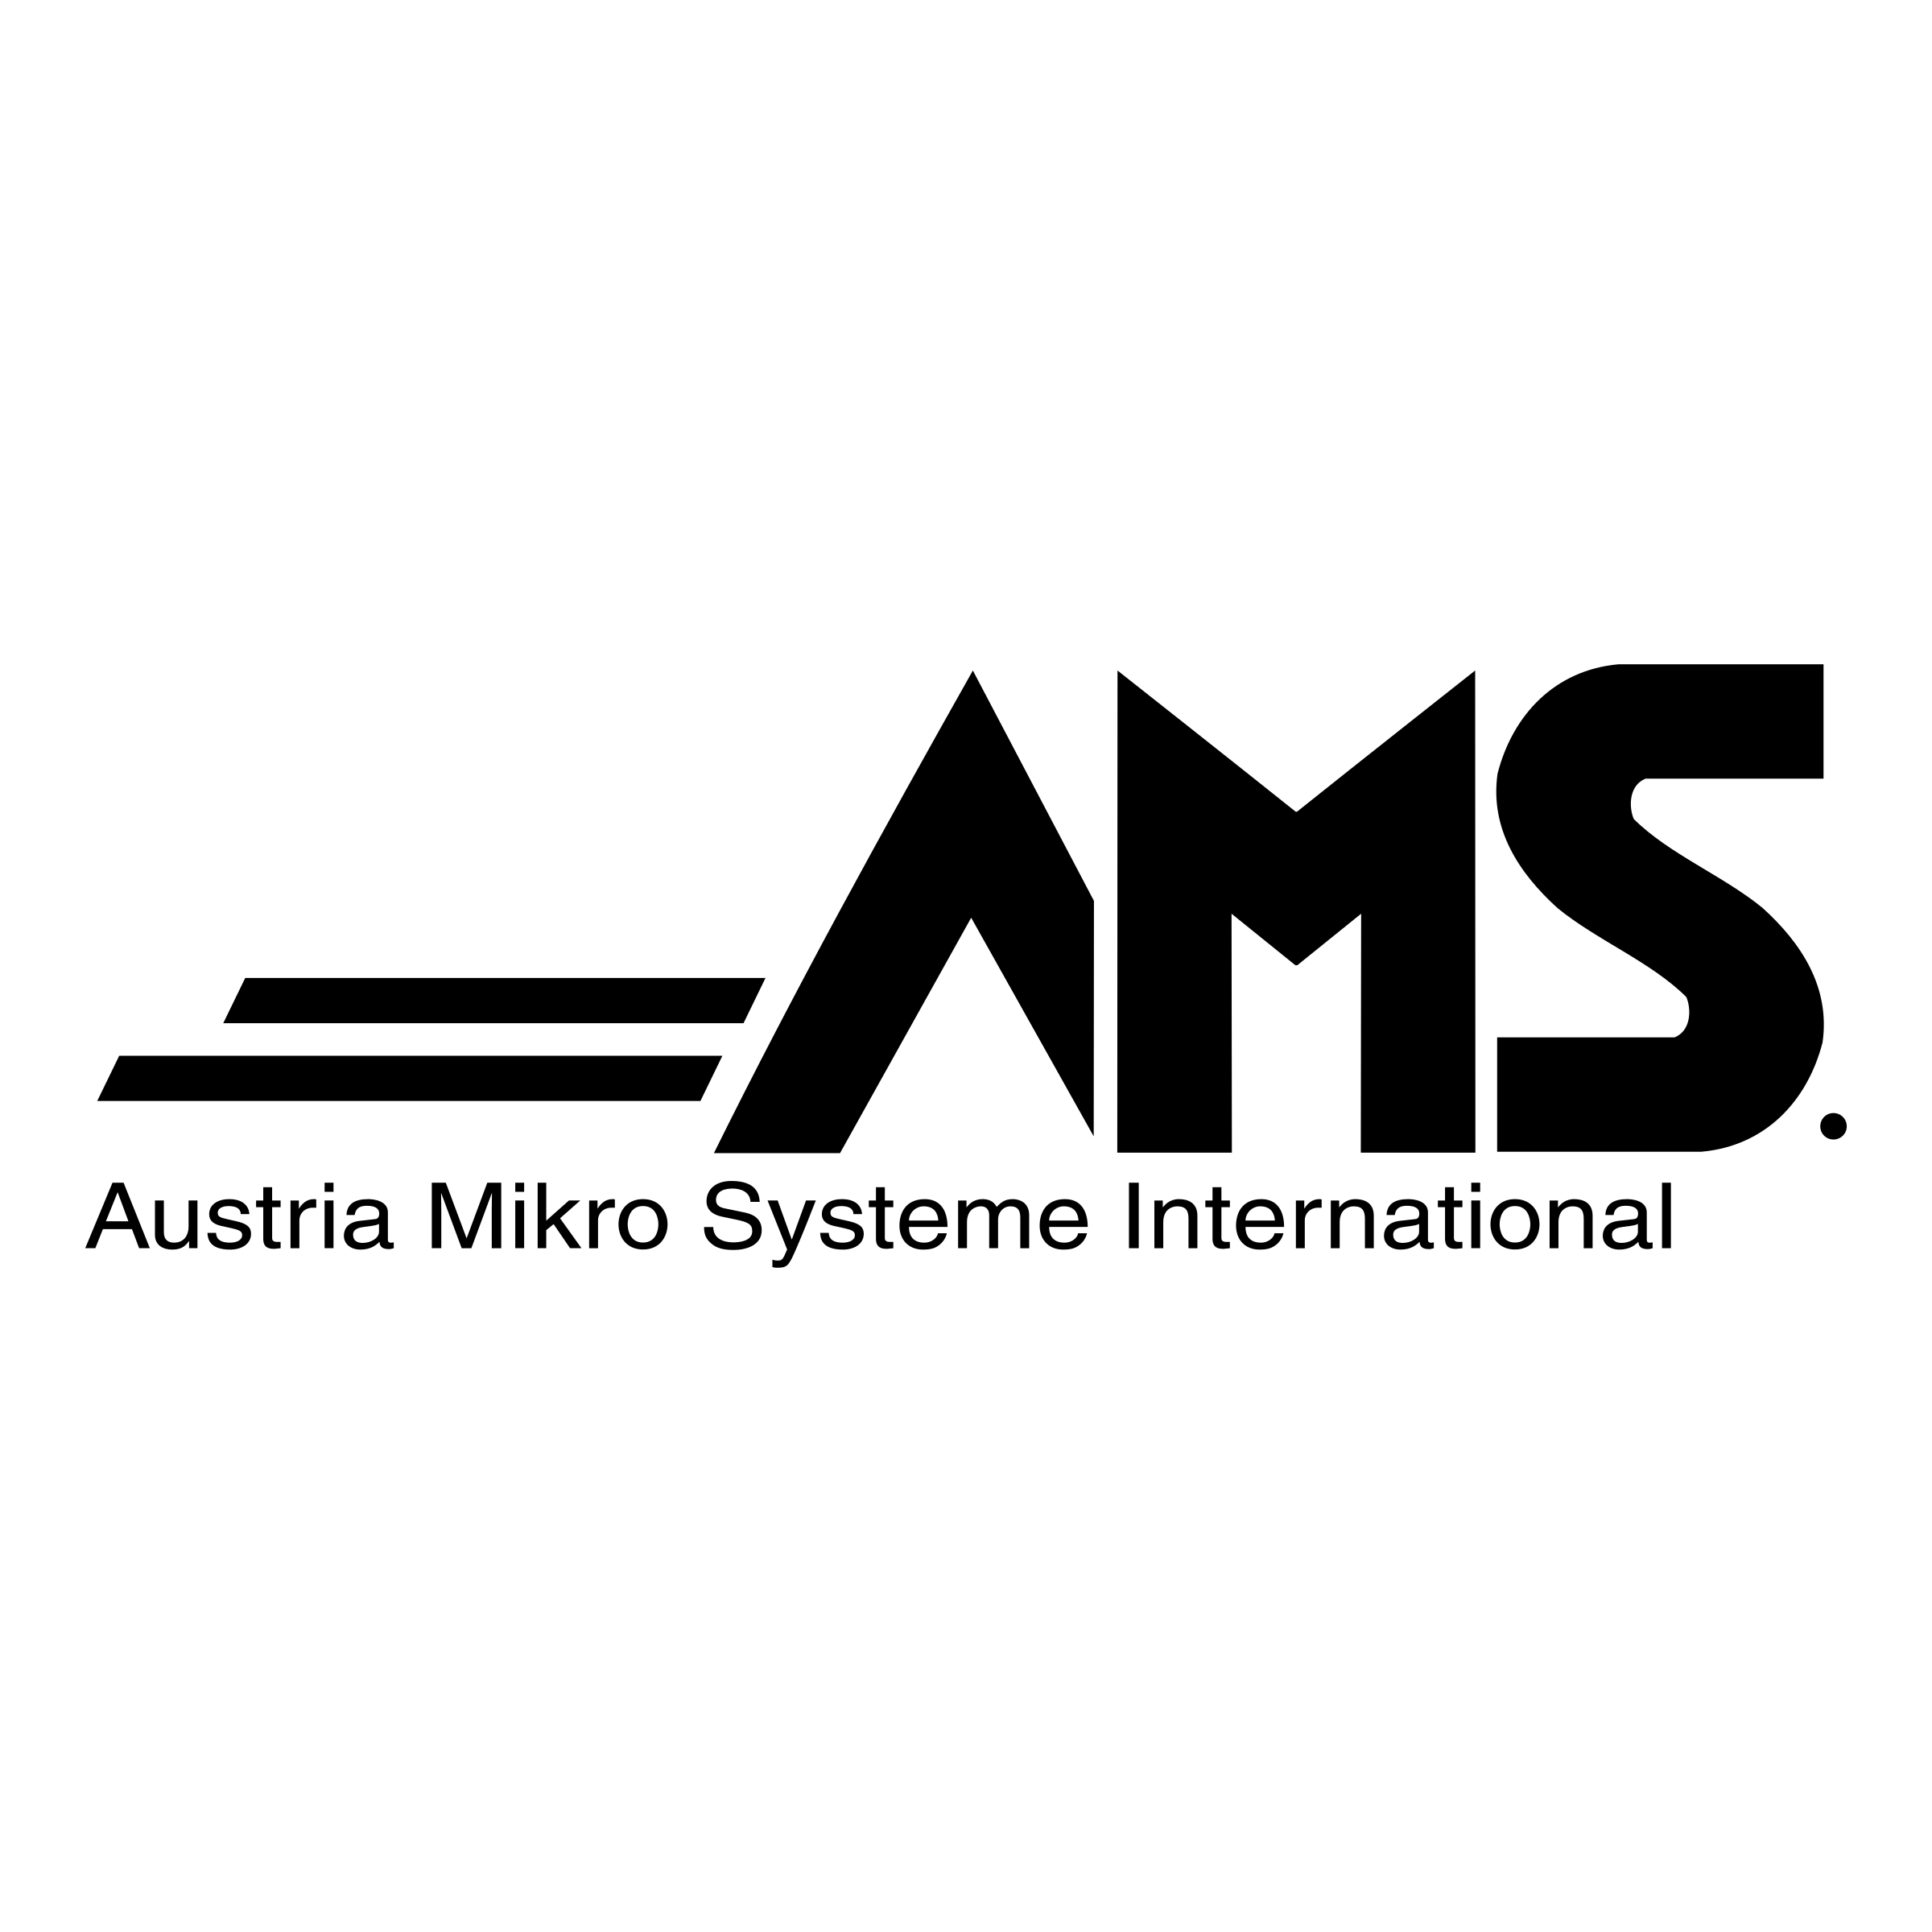 AMS Logo - AMS 03 Logo PNG Transparent & SVG Vector - Freebie Supply